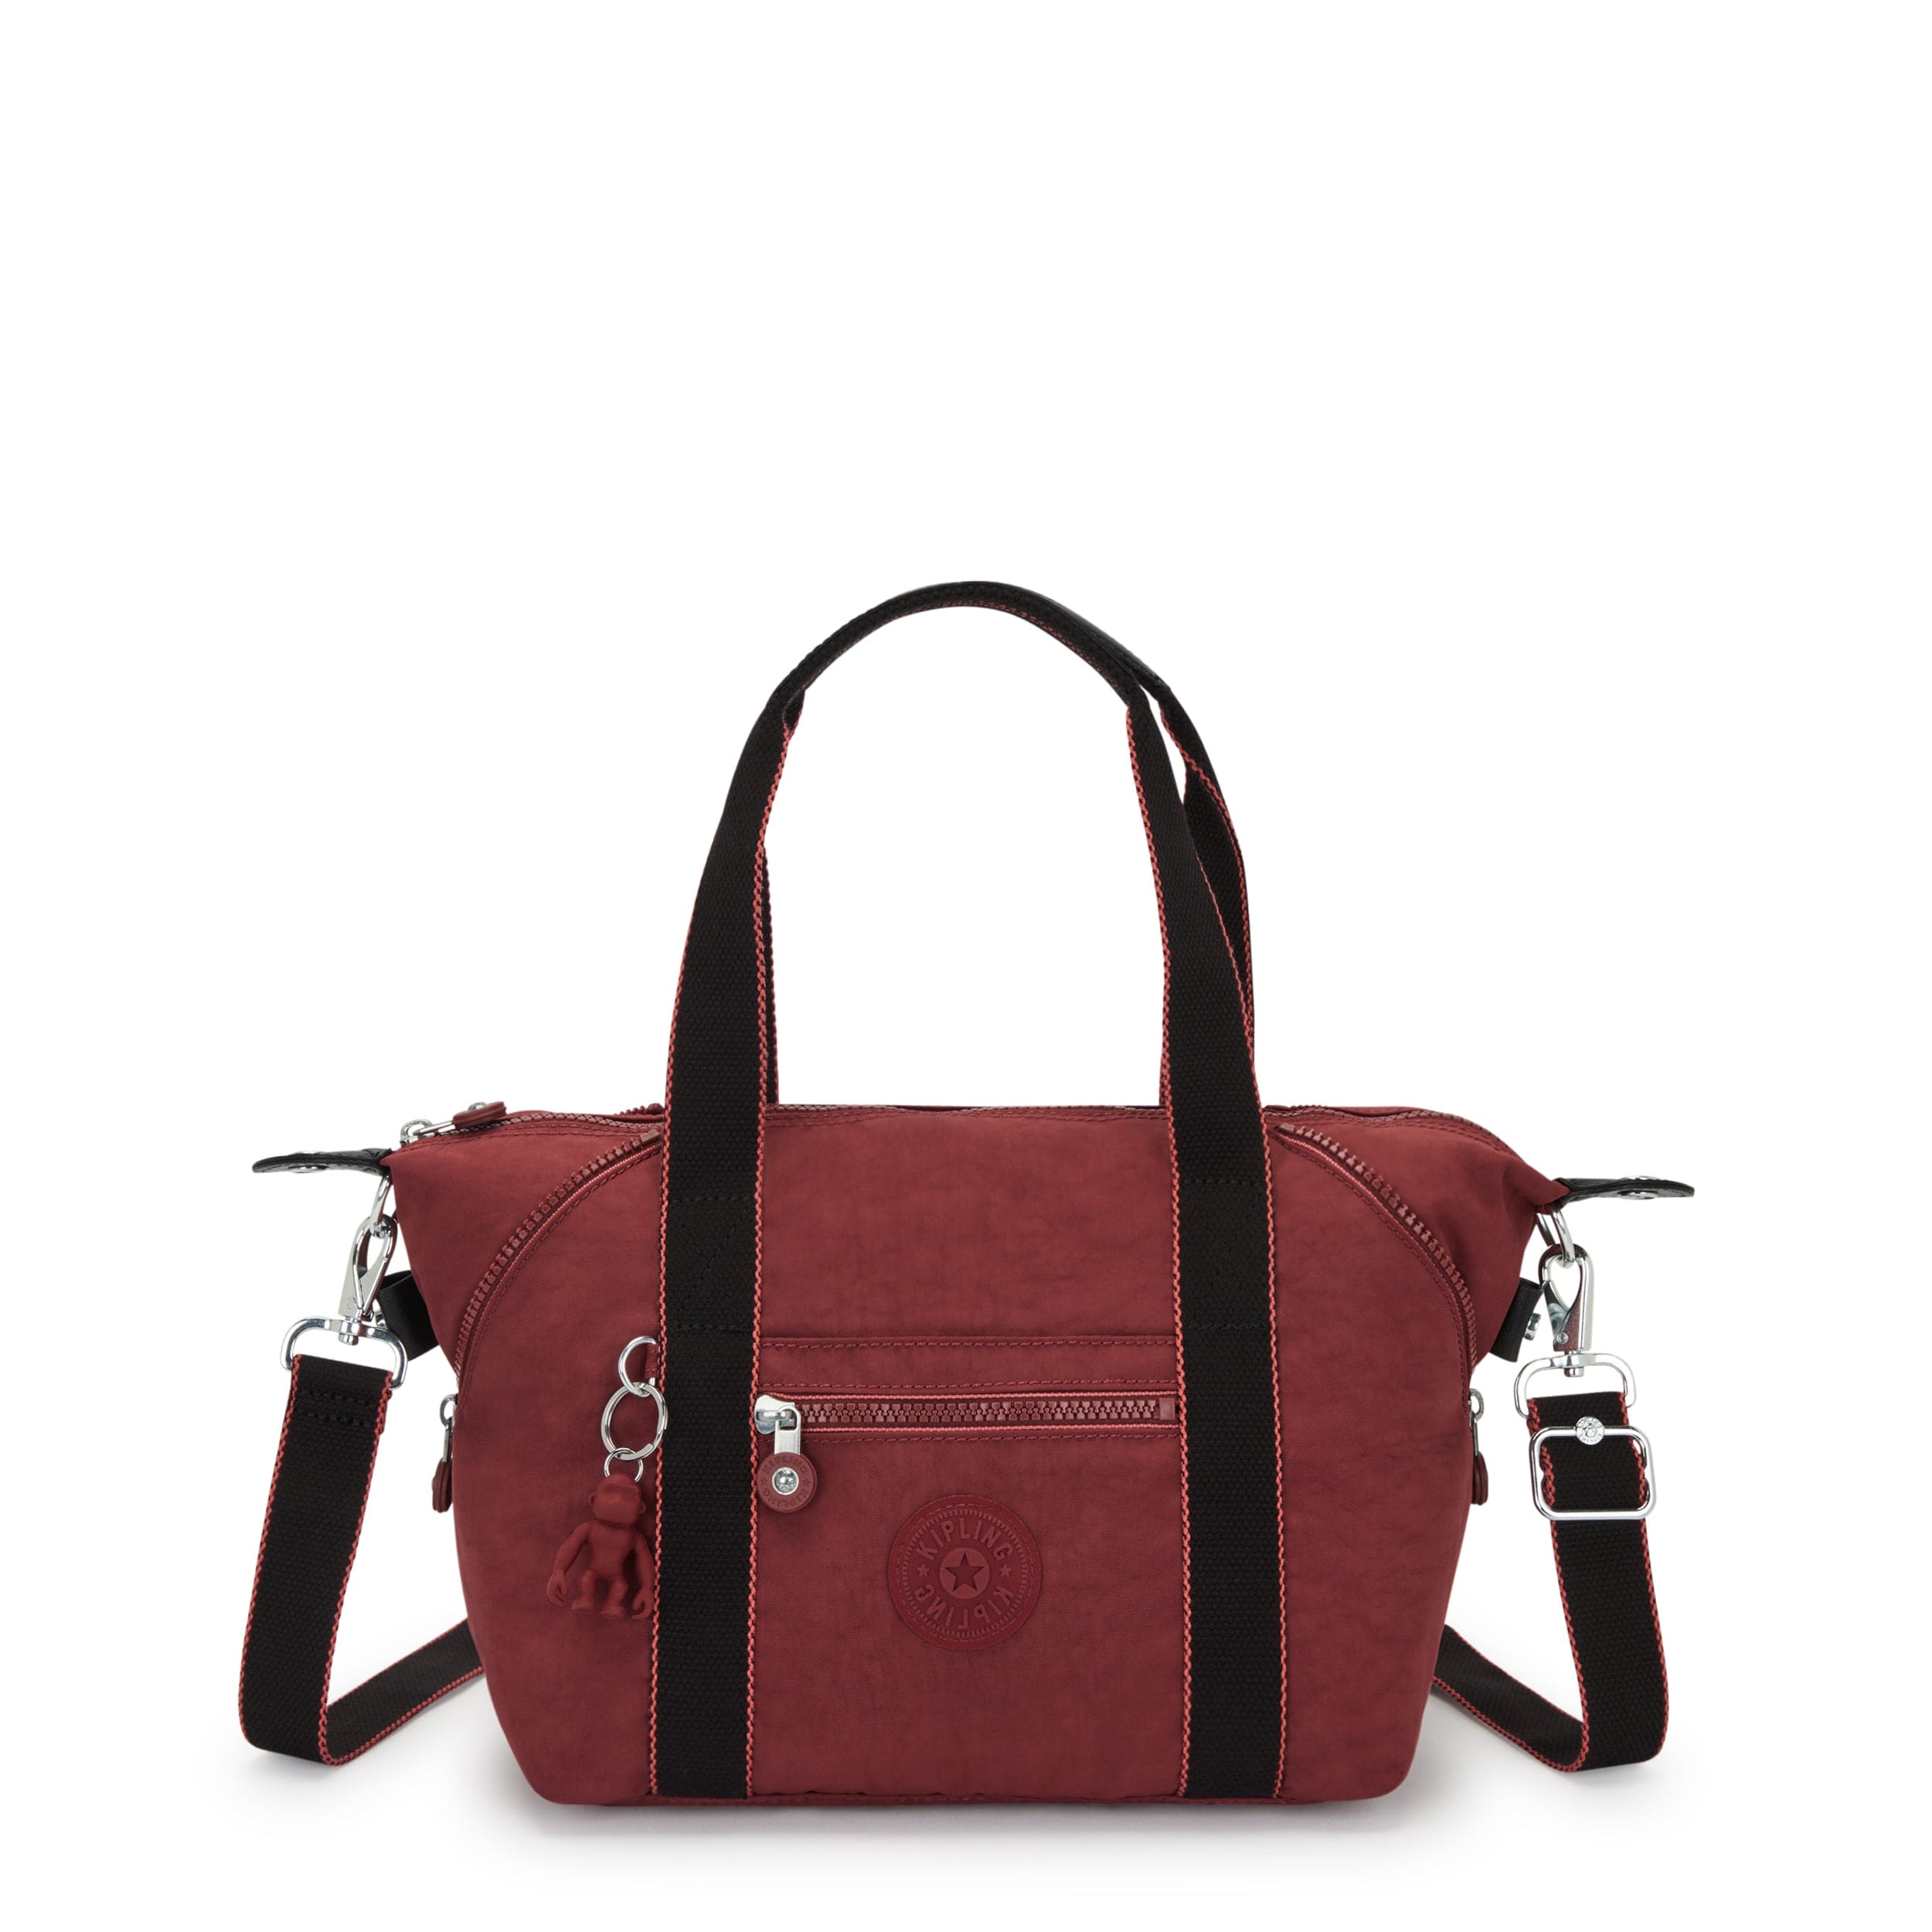 KIPLING-Art Mini-Small Handbag (With Removable Shoulderstrap)-Flaring Rust-01327-A1N